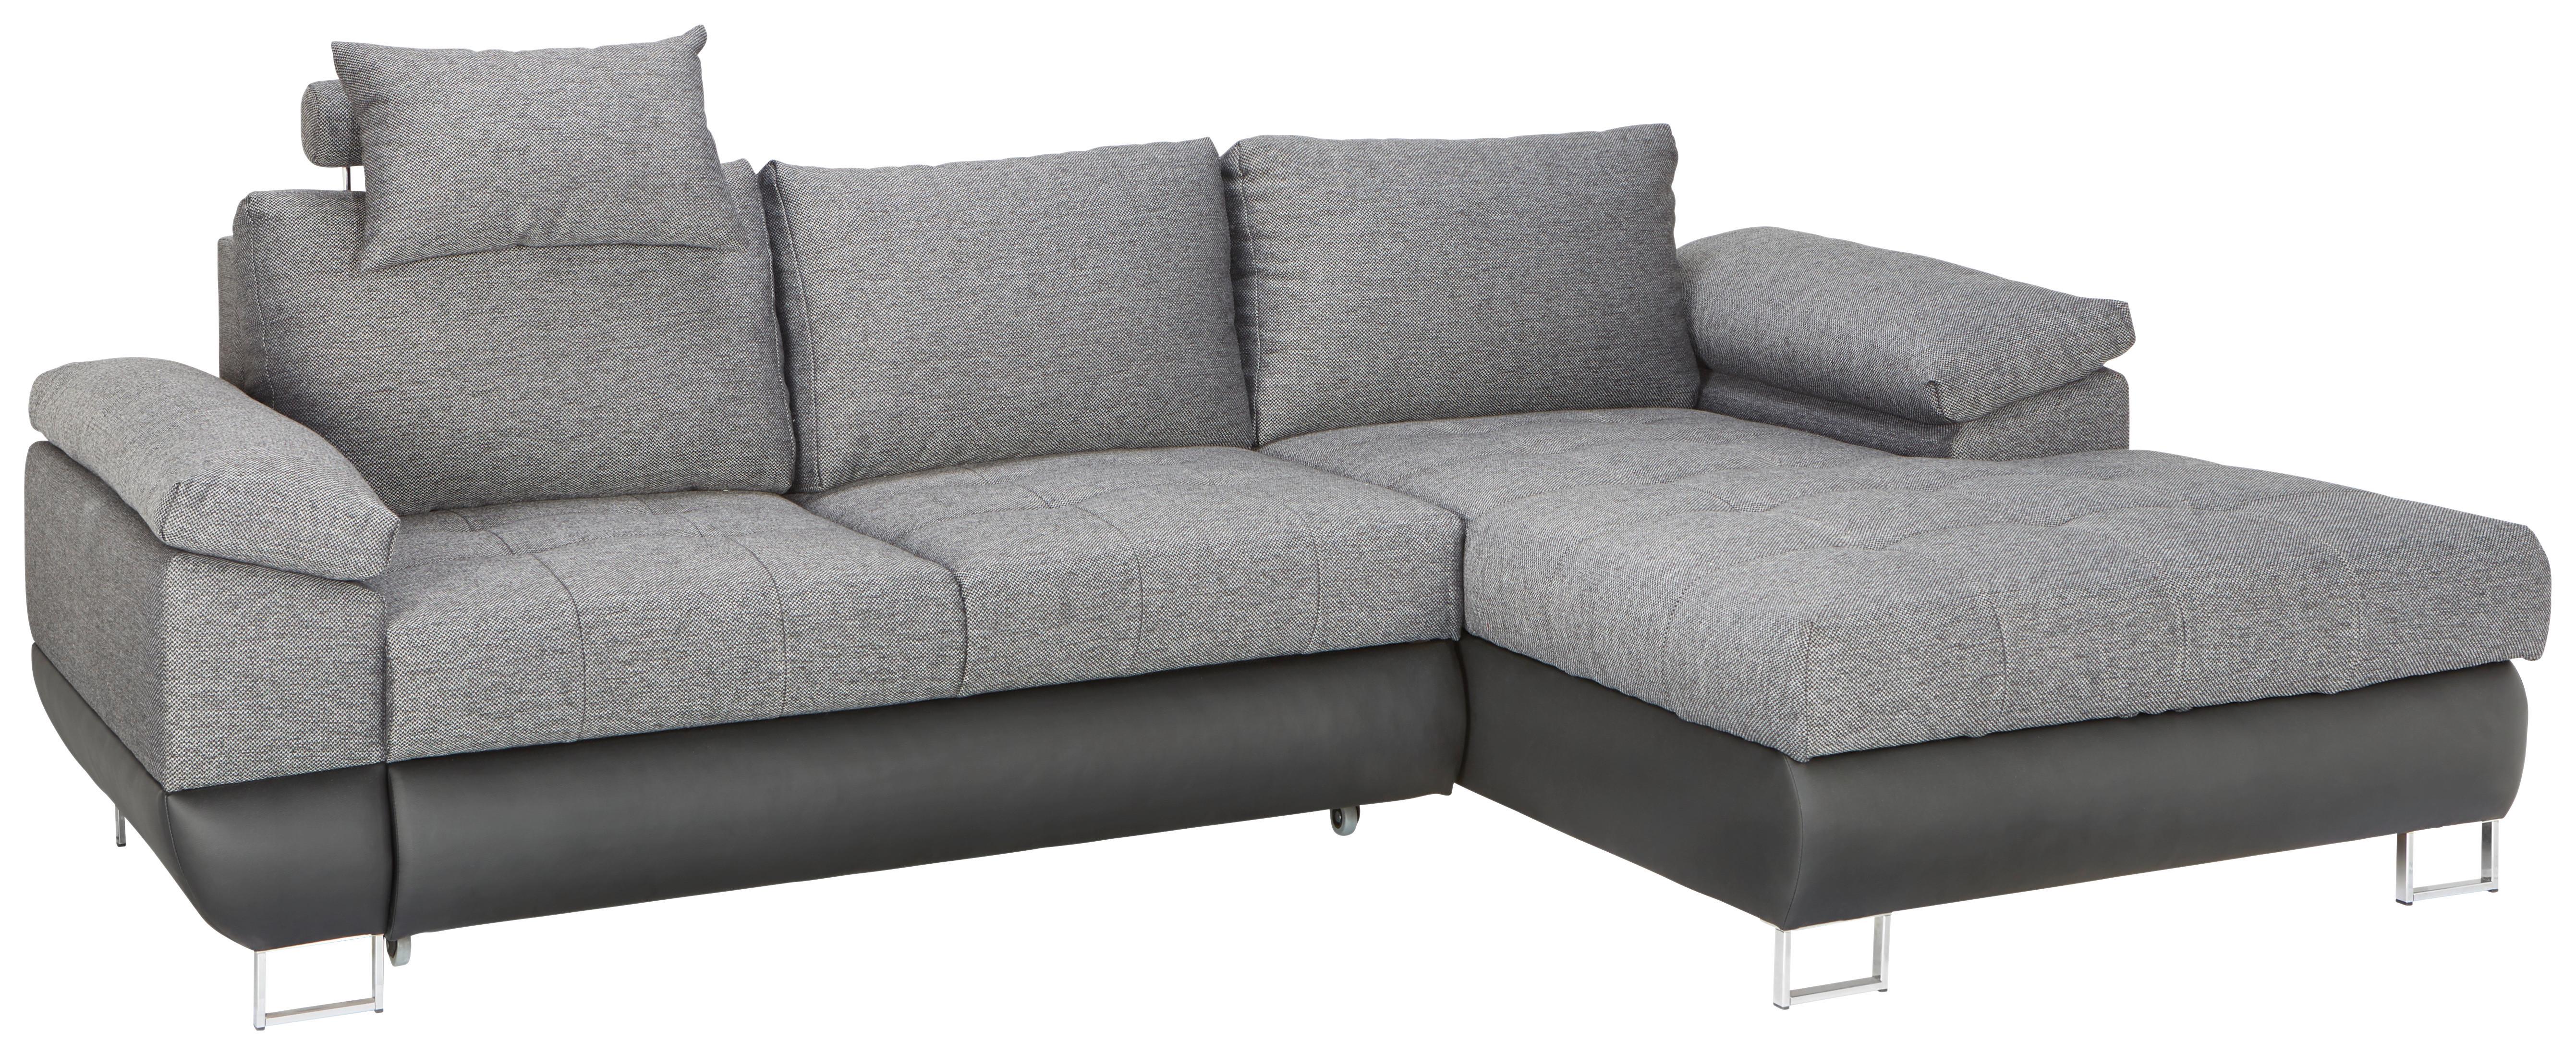 Sedežna Garnitura Focus - temno siva/siva, Moderno, umetna masa/tekstil (268/91/170cm) - Modern Living